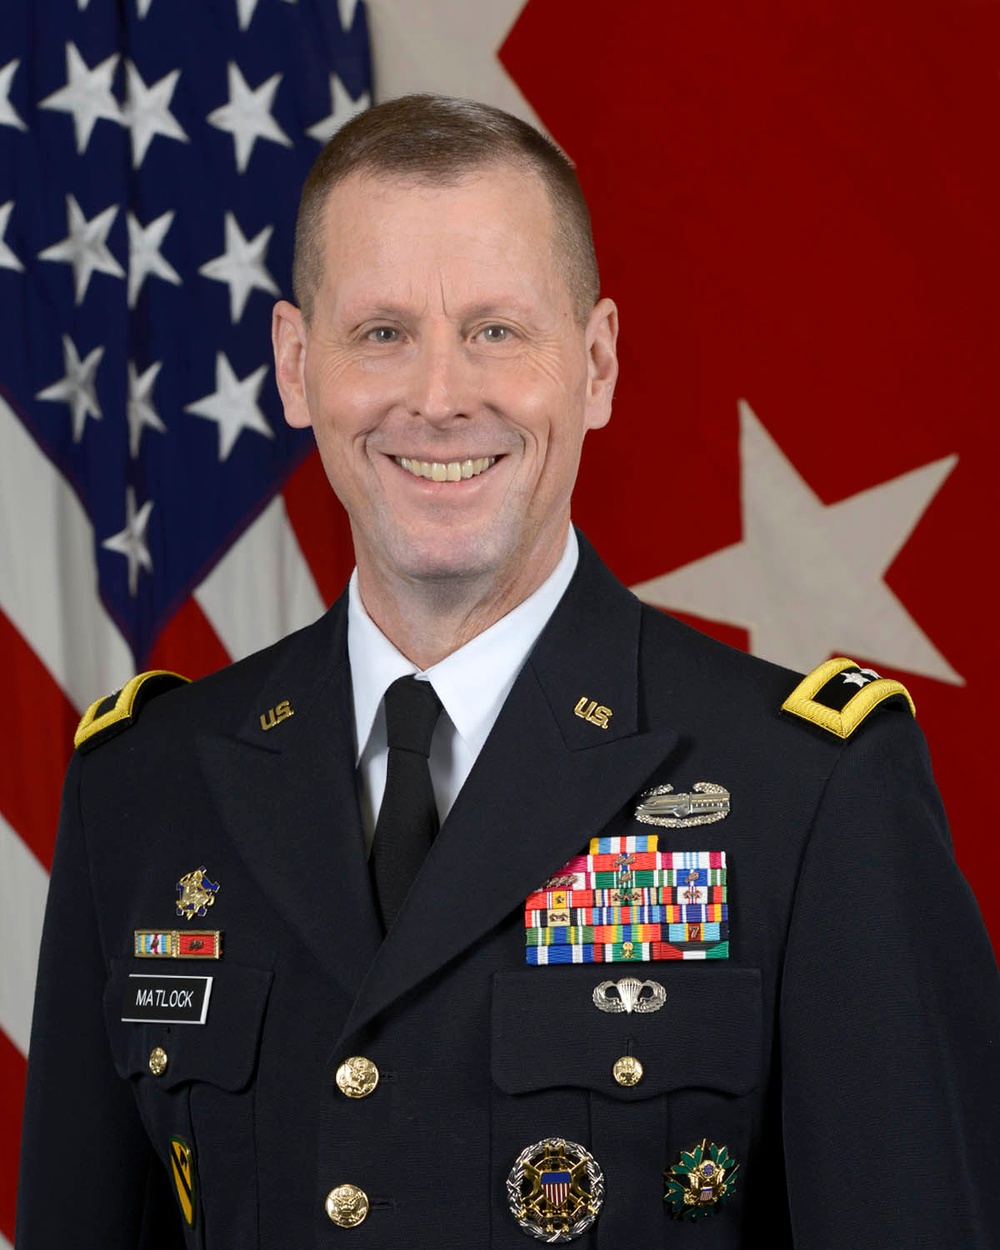 Maj. Gen. Patrick Matlock